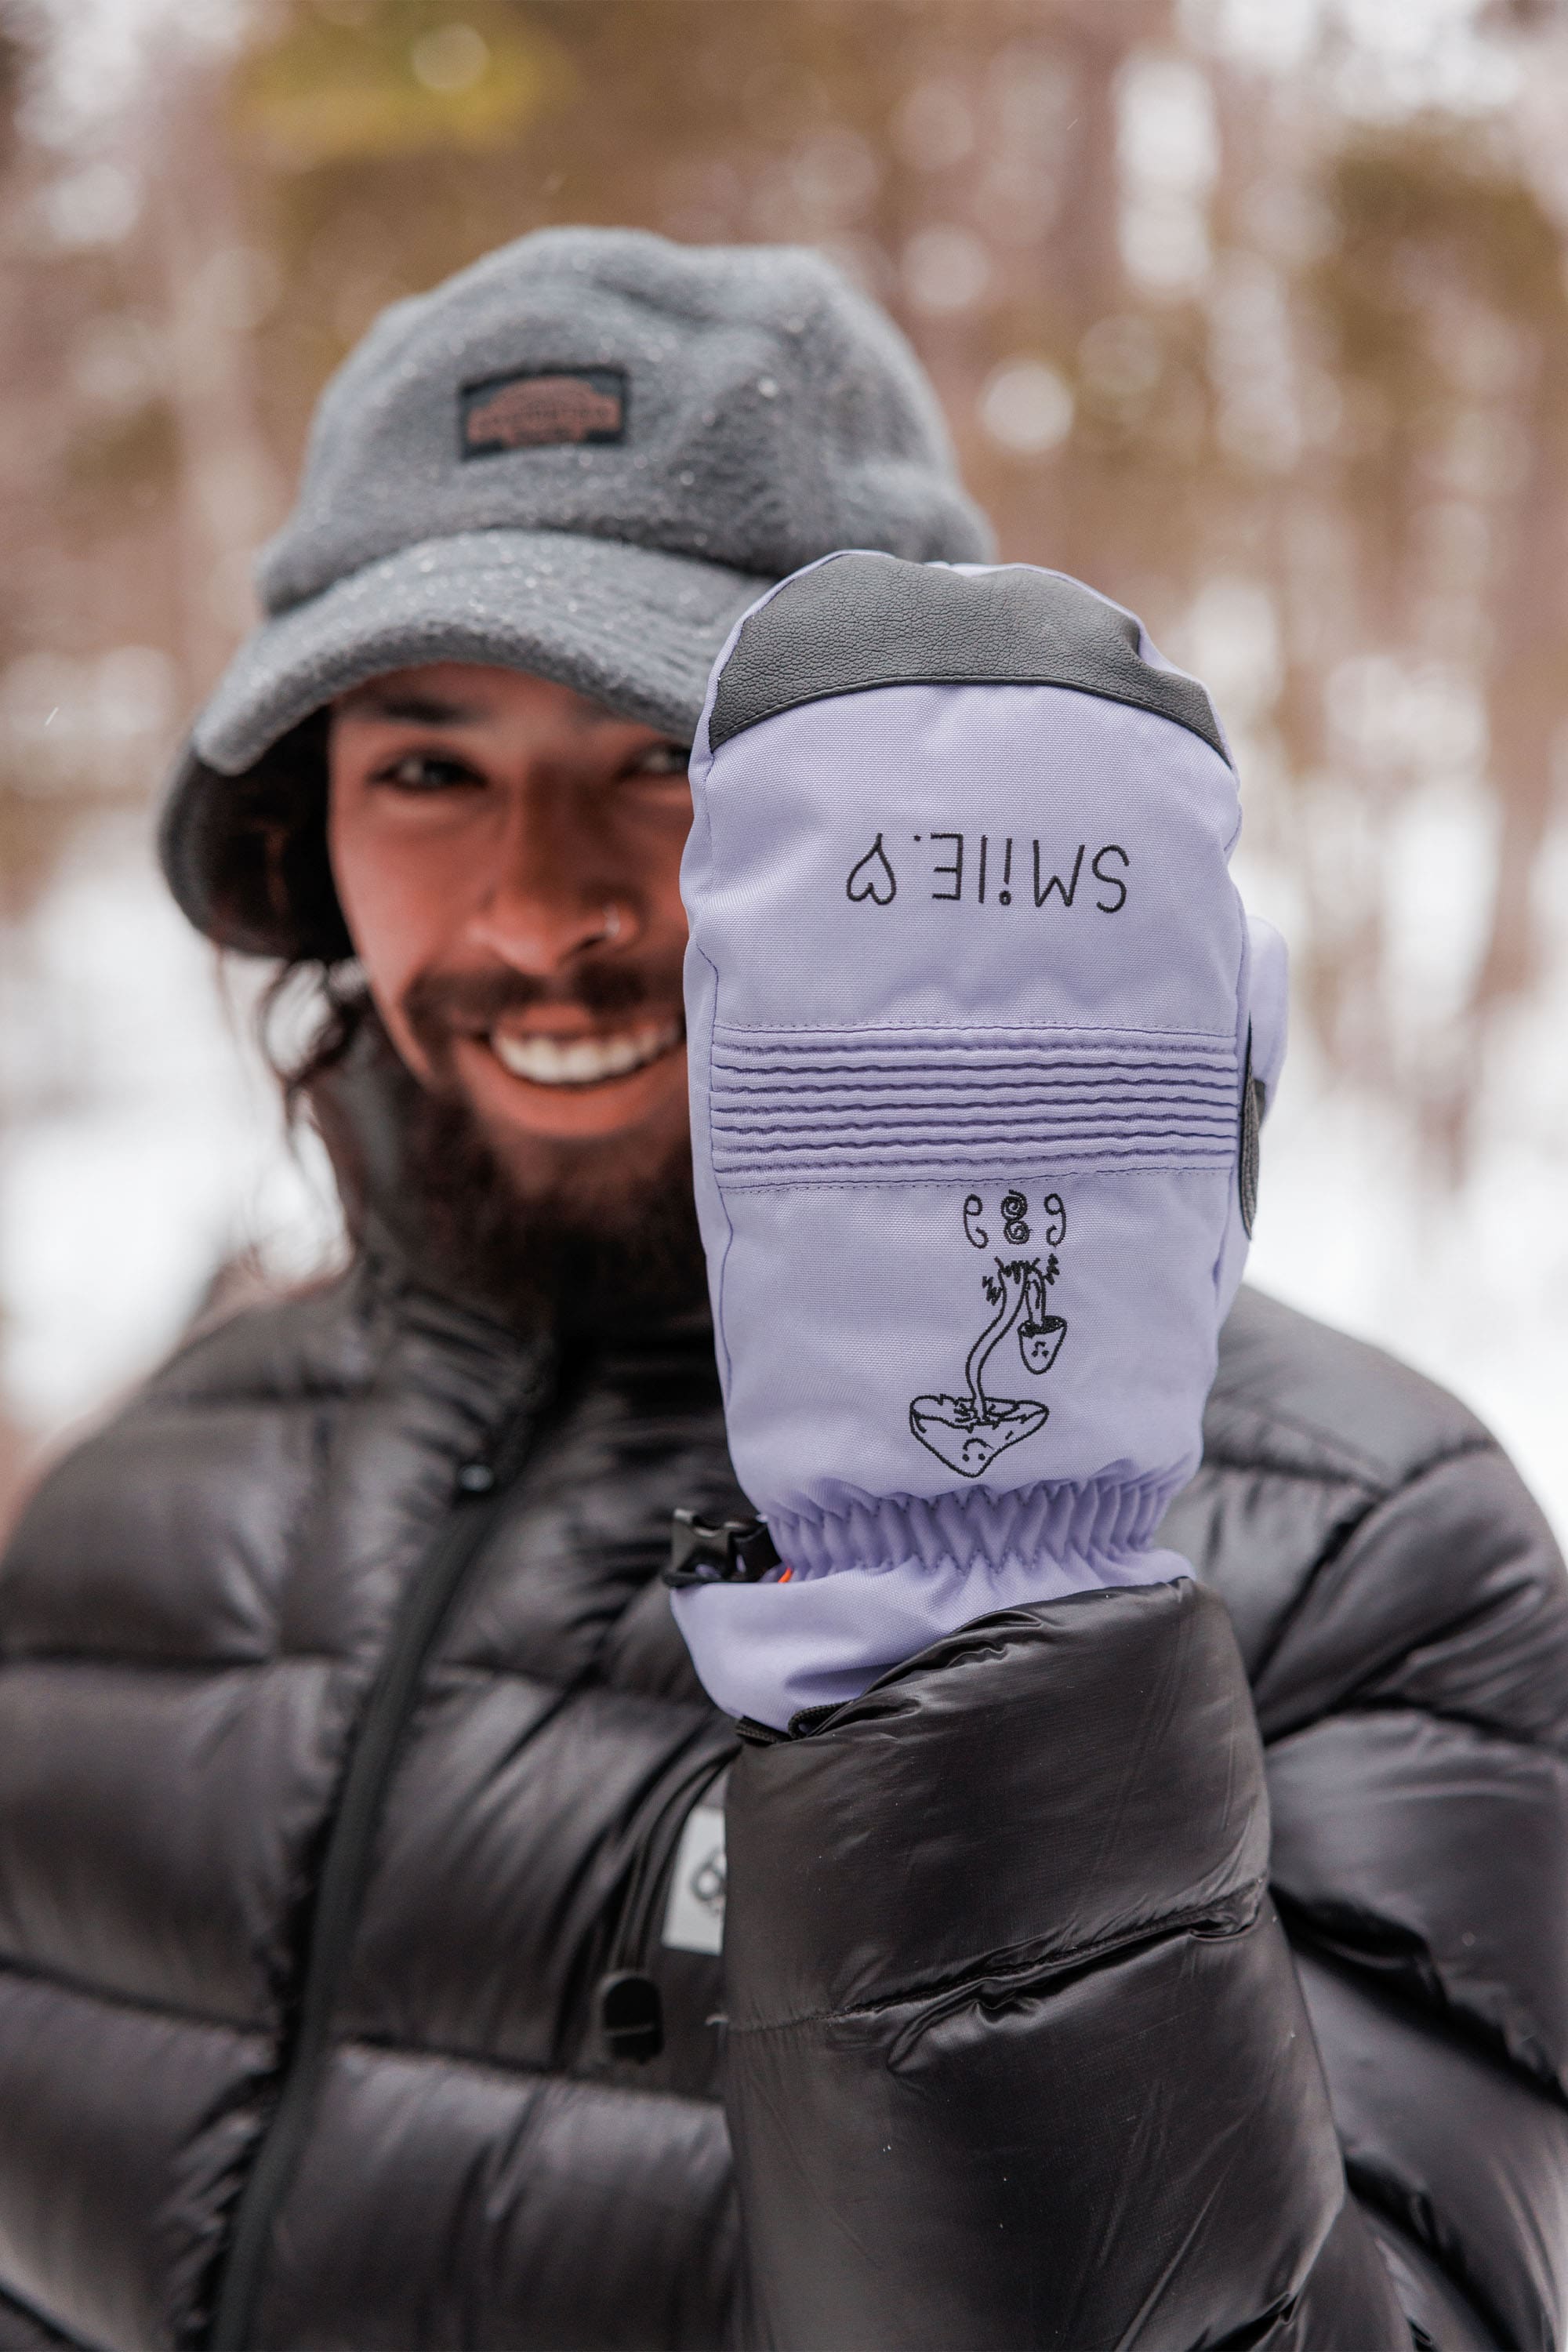 686 Technical Apparel | Men's Snow Gloves & Mitts – 686.com